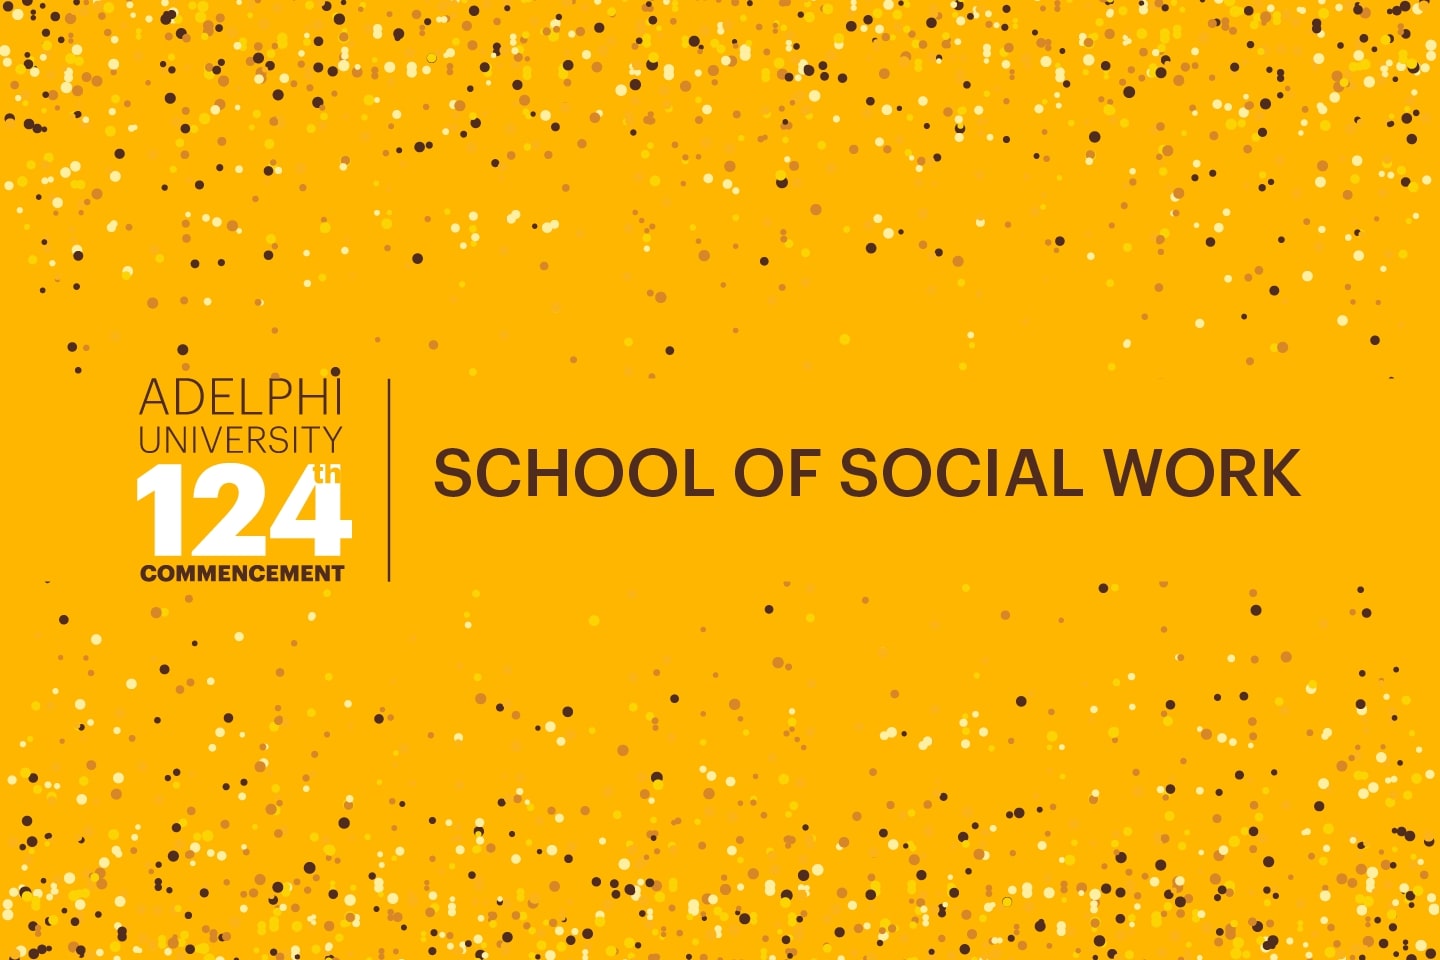 Adelphi University 124th Commencement: School of Social Work